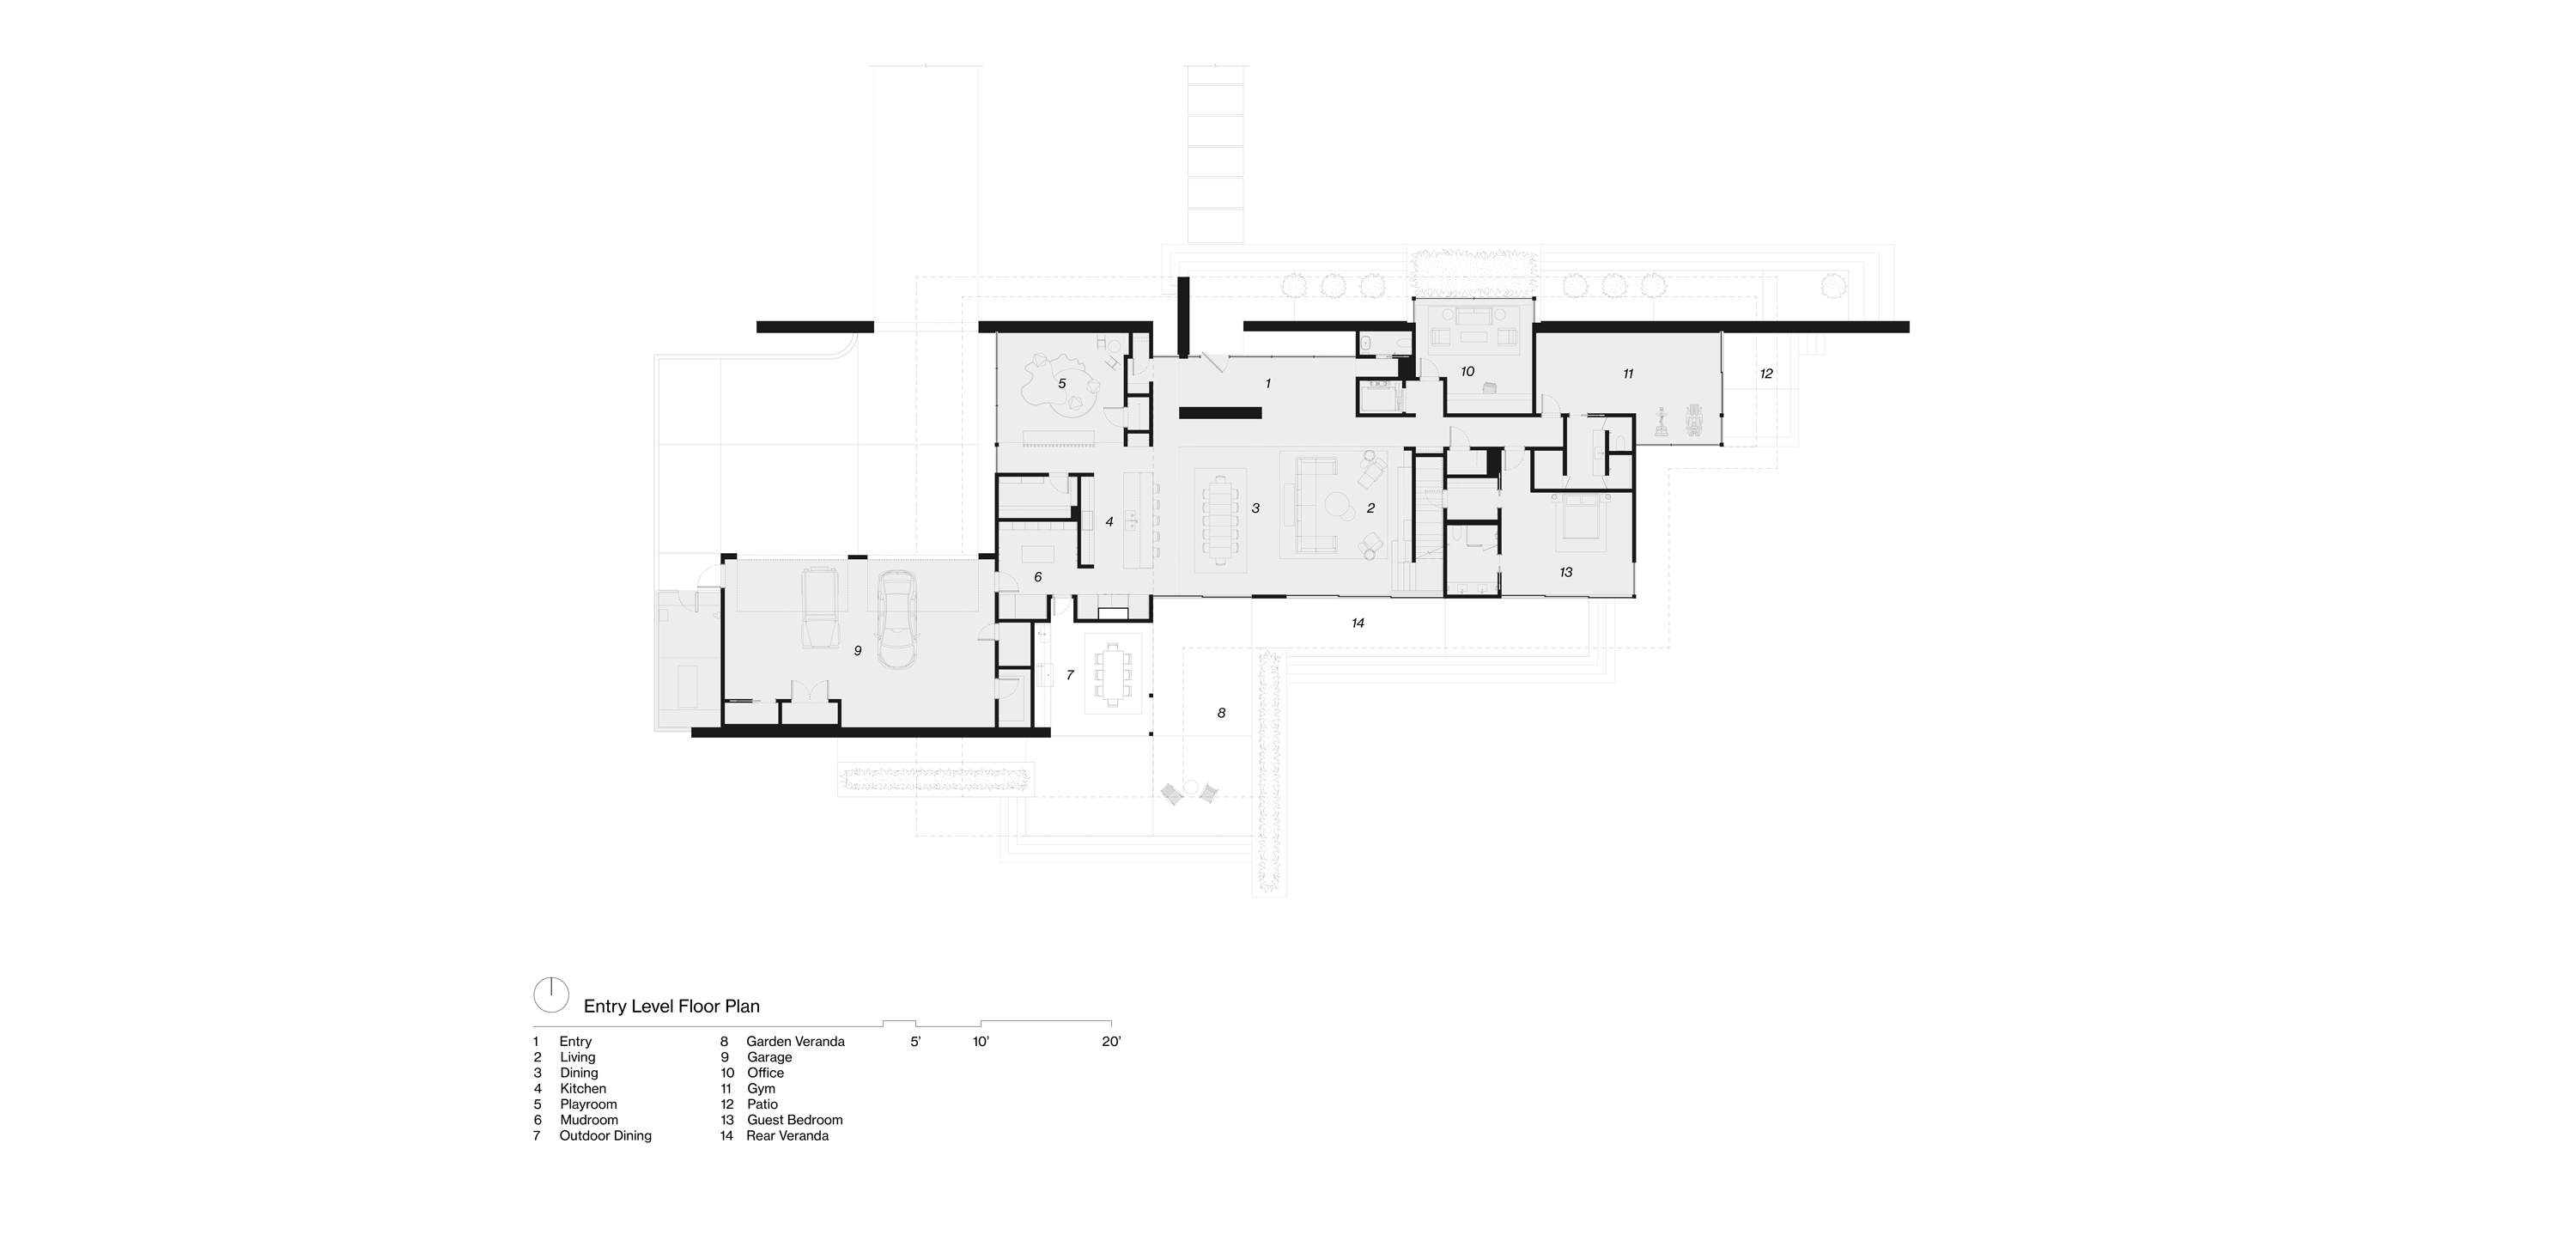 First floor plan of Kazoku House by Specht Novak Architects.